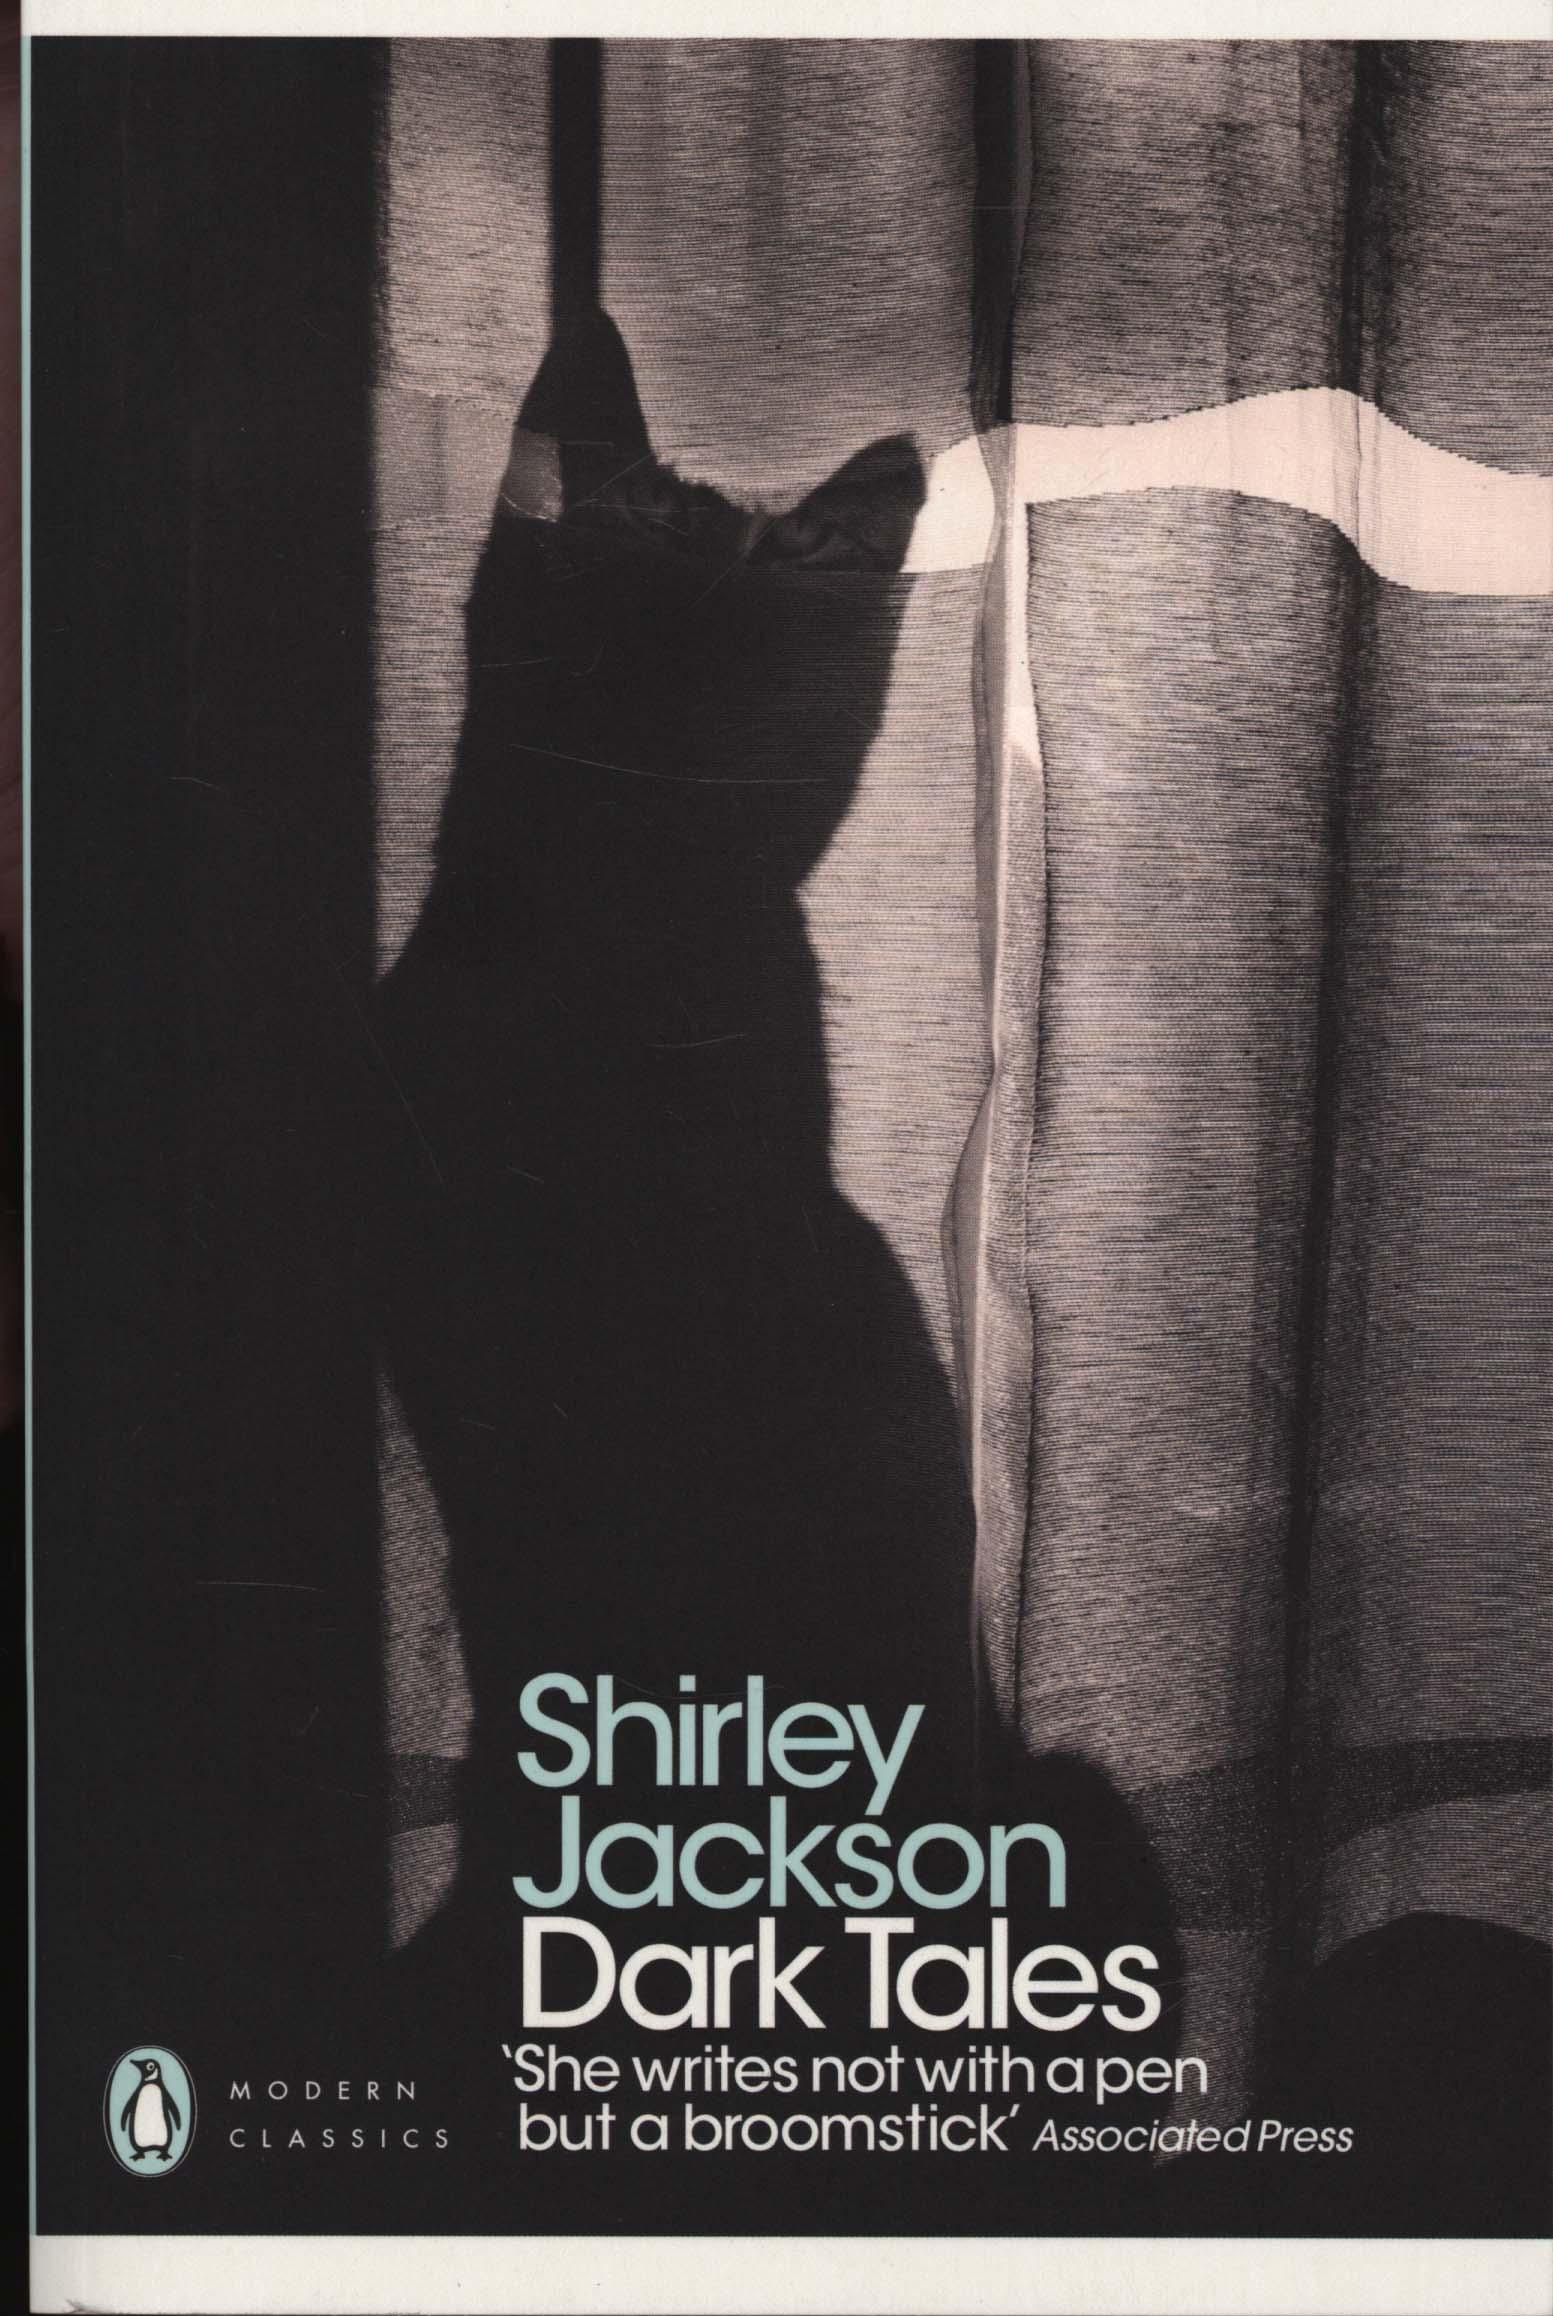 Dark Tales - Shirley Jackson